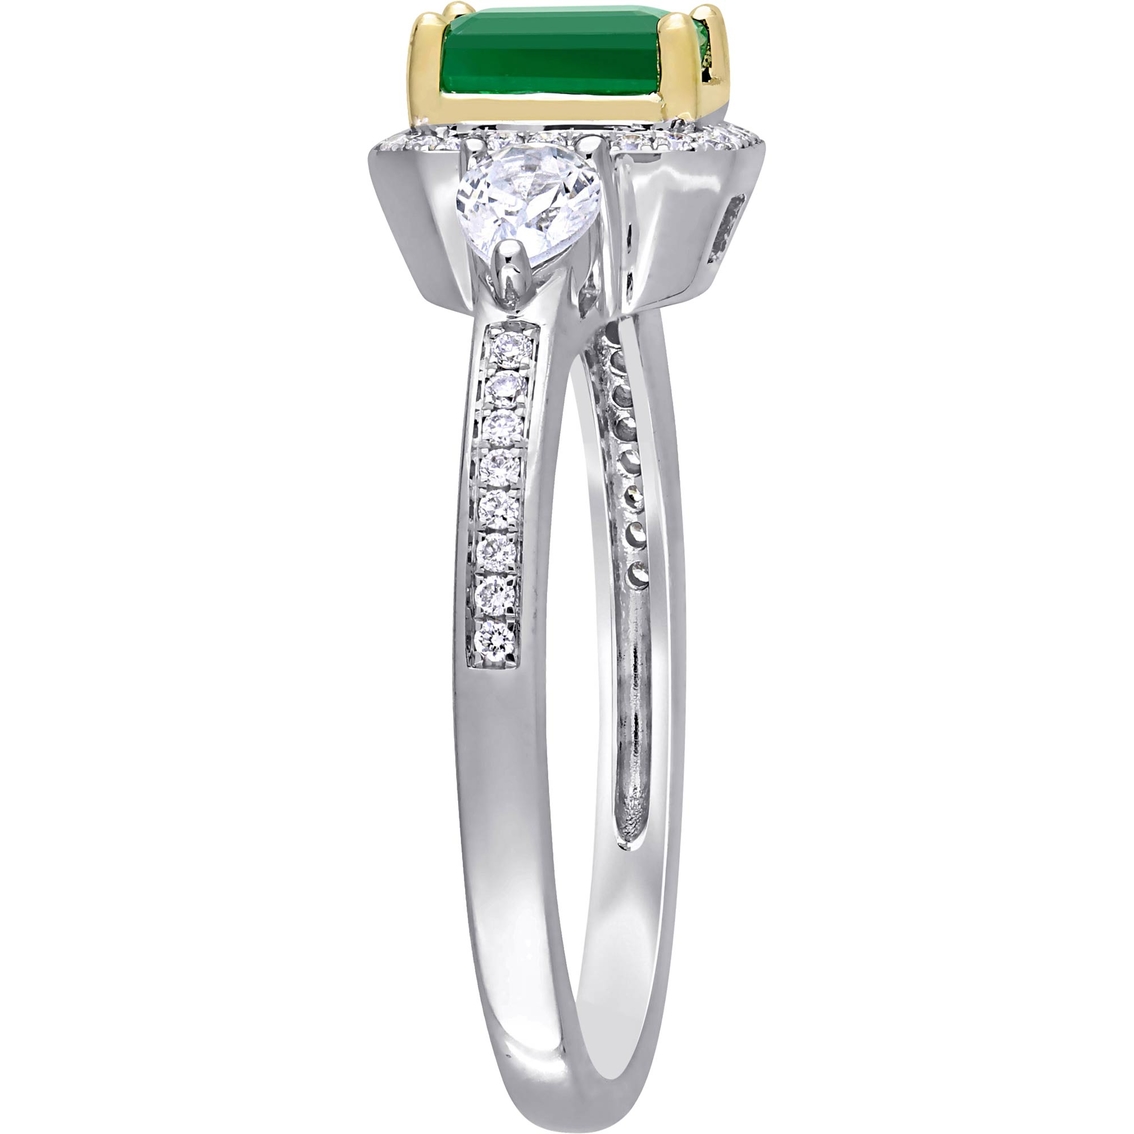 Sofia B. 14K Gold Emerald, White Sapphire and 1/8 CTW Diamond 3 Stone Ring - Image 3 of 4